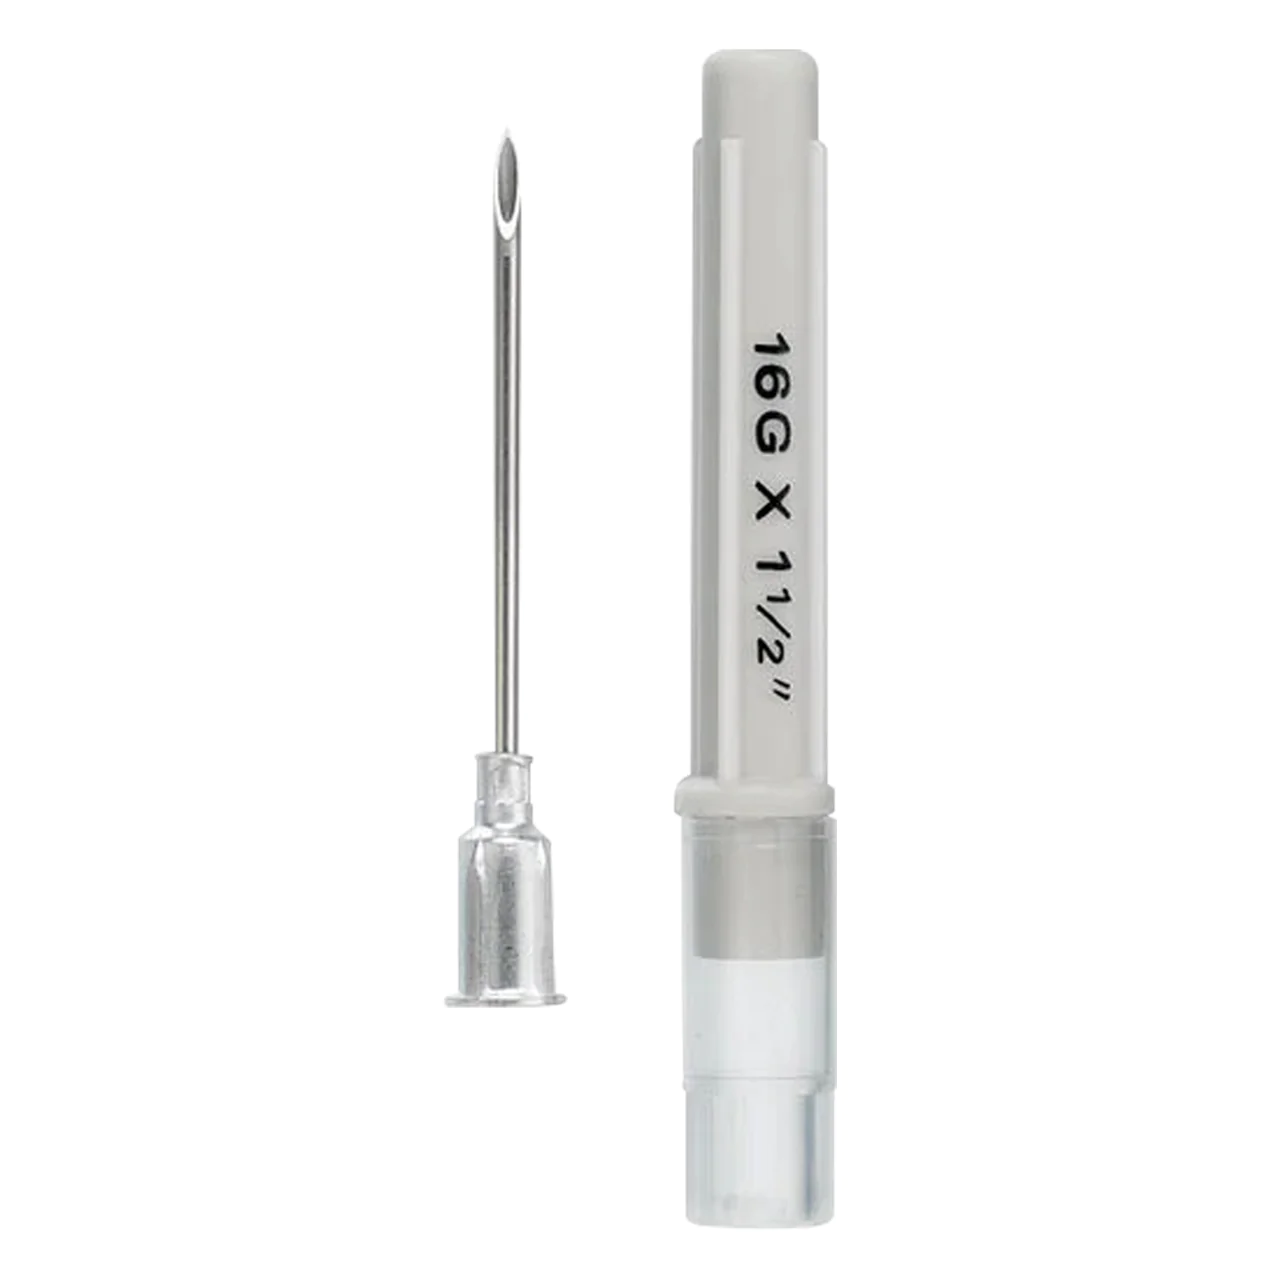 IVS Aluminum Hub Needles (100pk) - 18g x 1/2"